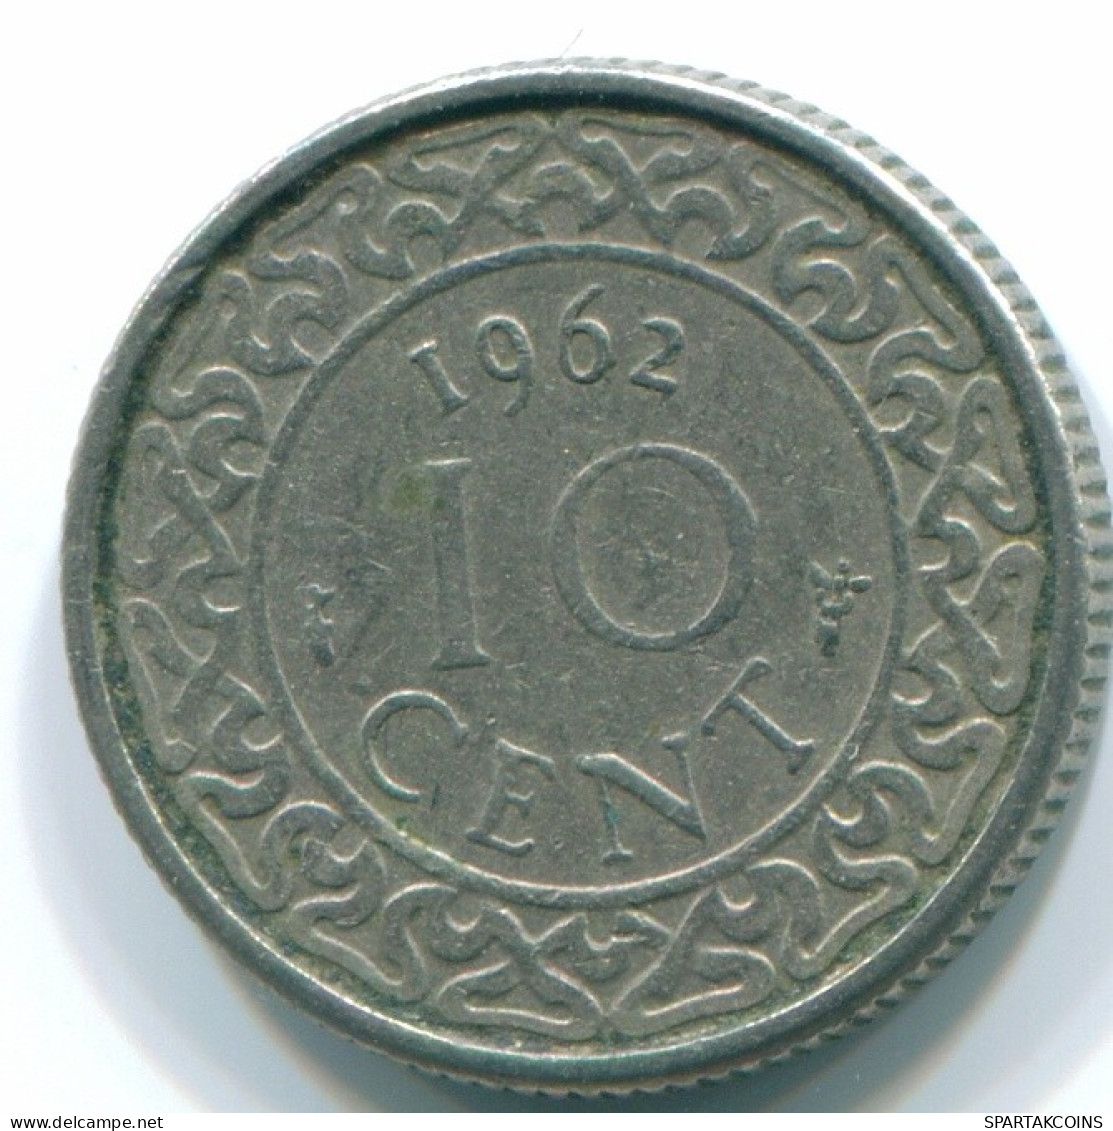 10 CENTS 1962 SURINAME Netherlands Nickel Colonial Coin #S13185.U.A - Suriname 1975 - ...